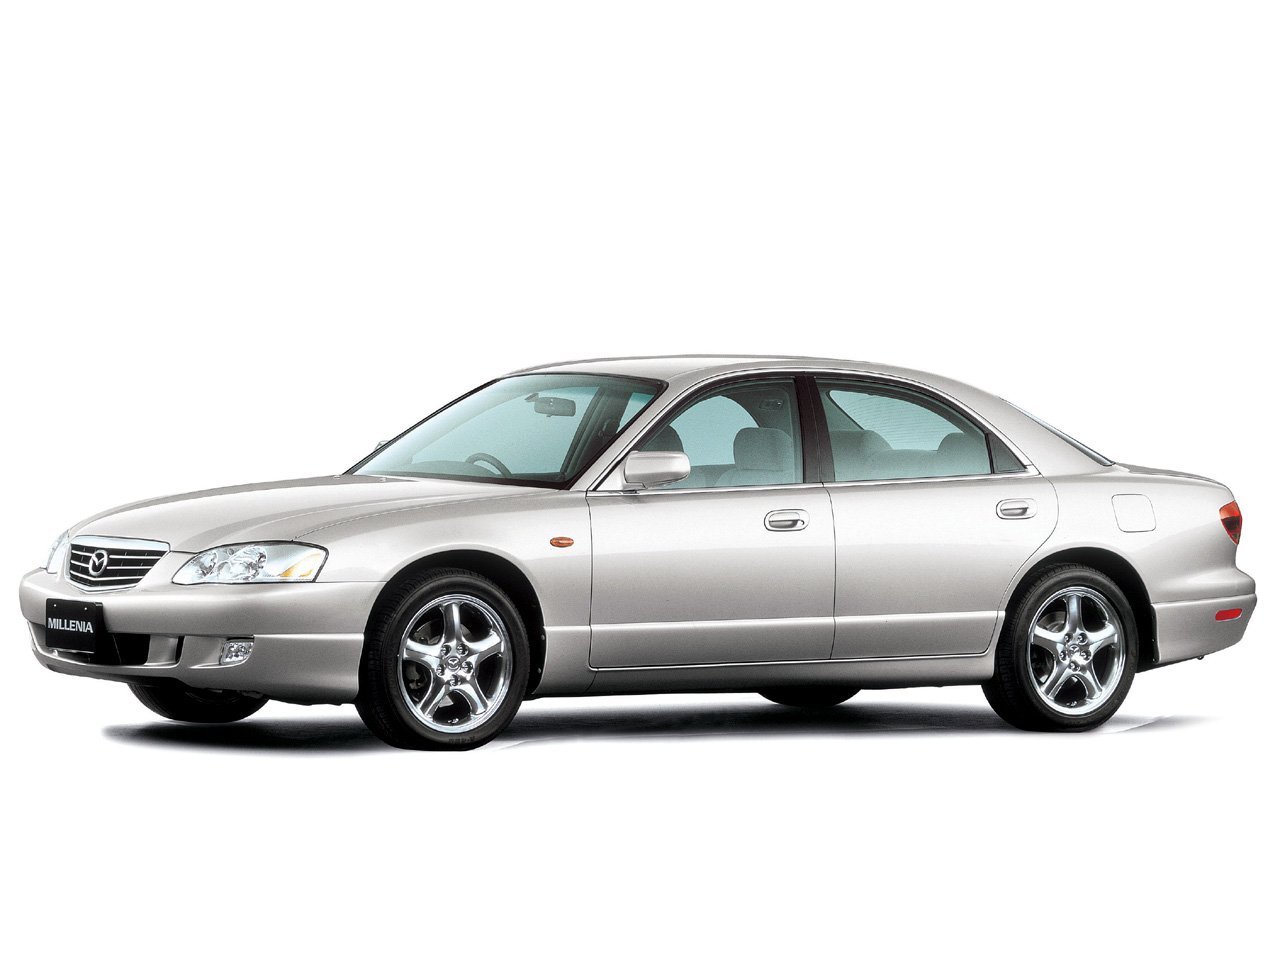 седан Mazda Millenia 2000 - 2002г выпуска модификация 2.3 MT (213 л.с.)